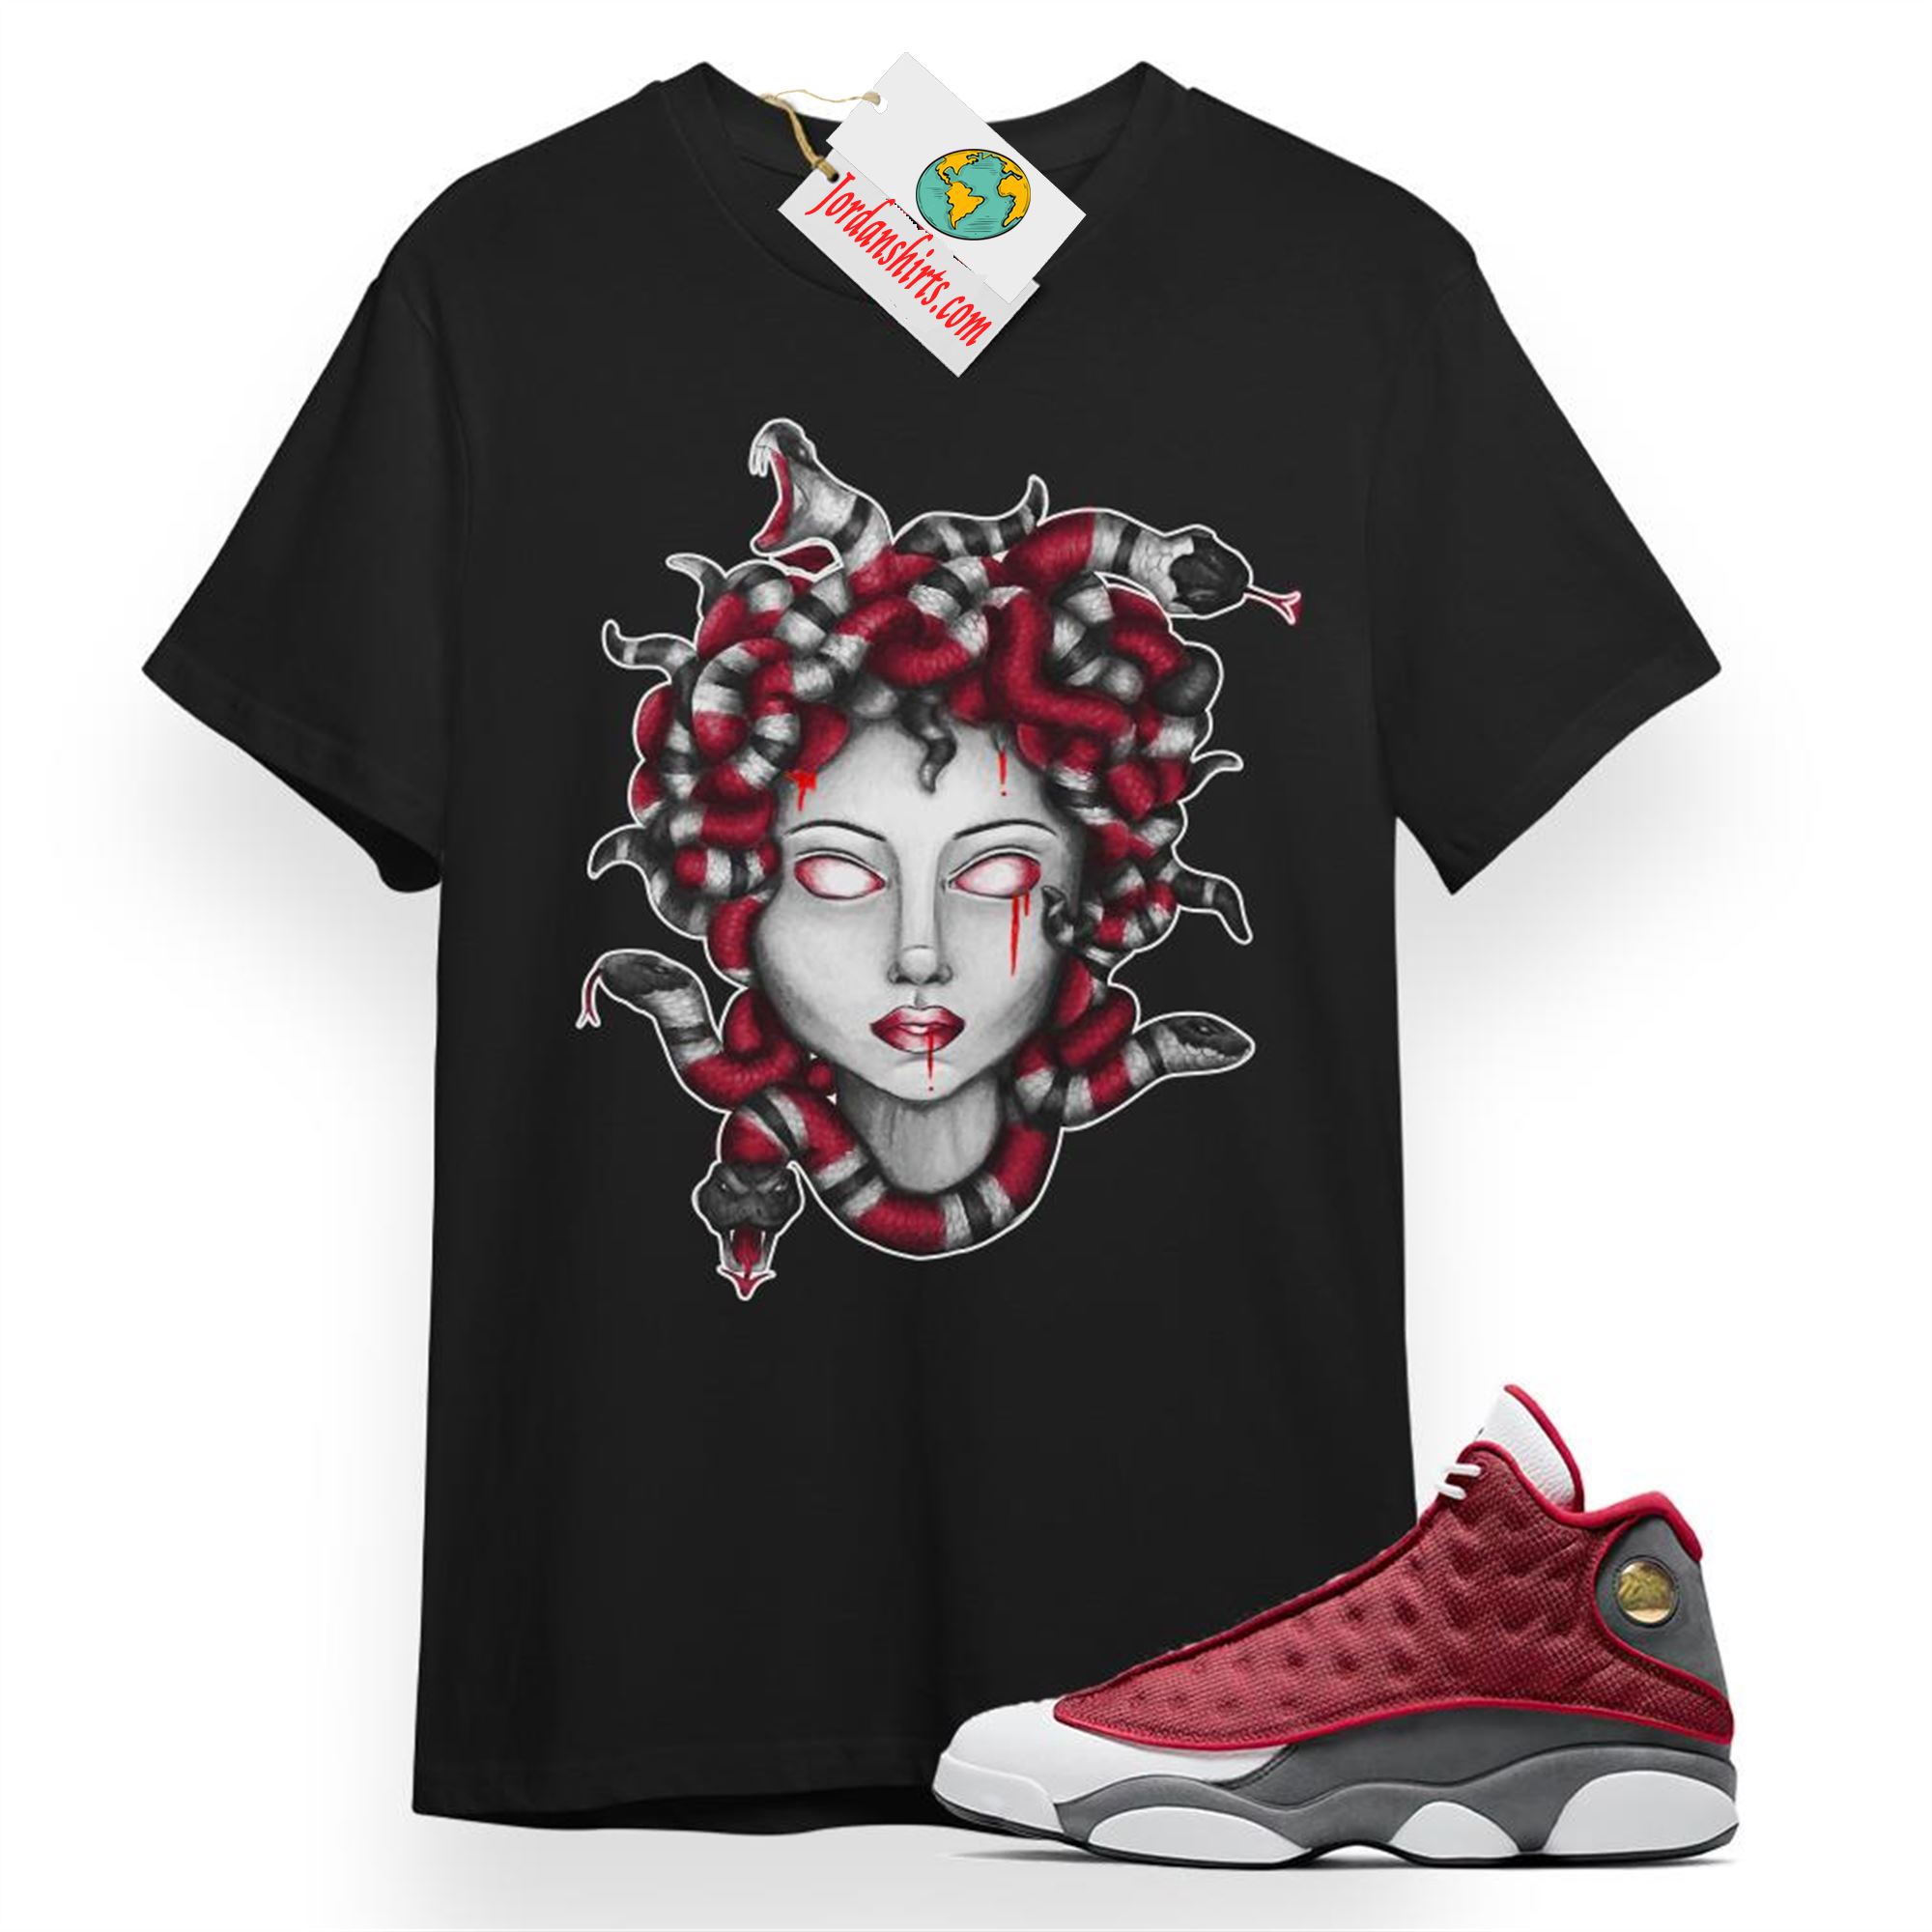 Jordan 13 Shirt, Medusa Snake Black T-shirt Air Jordan 13 Red Flint 13s Size Up To 5xl